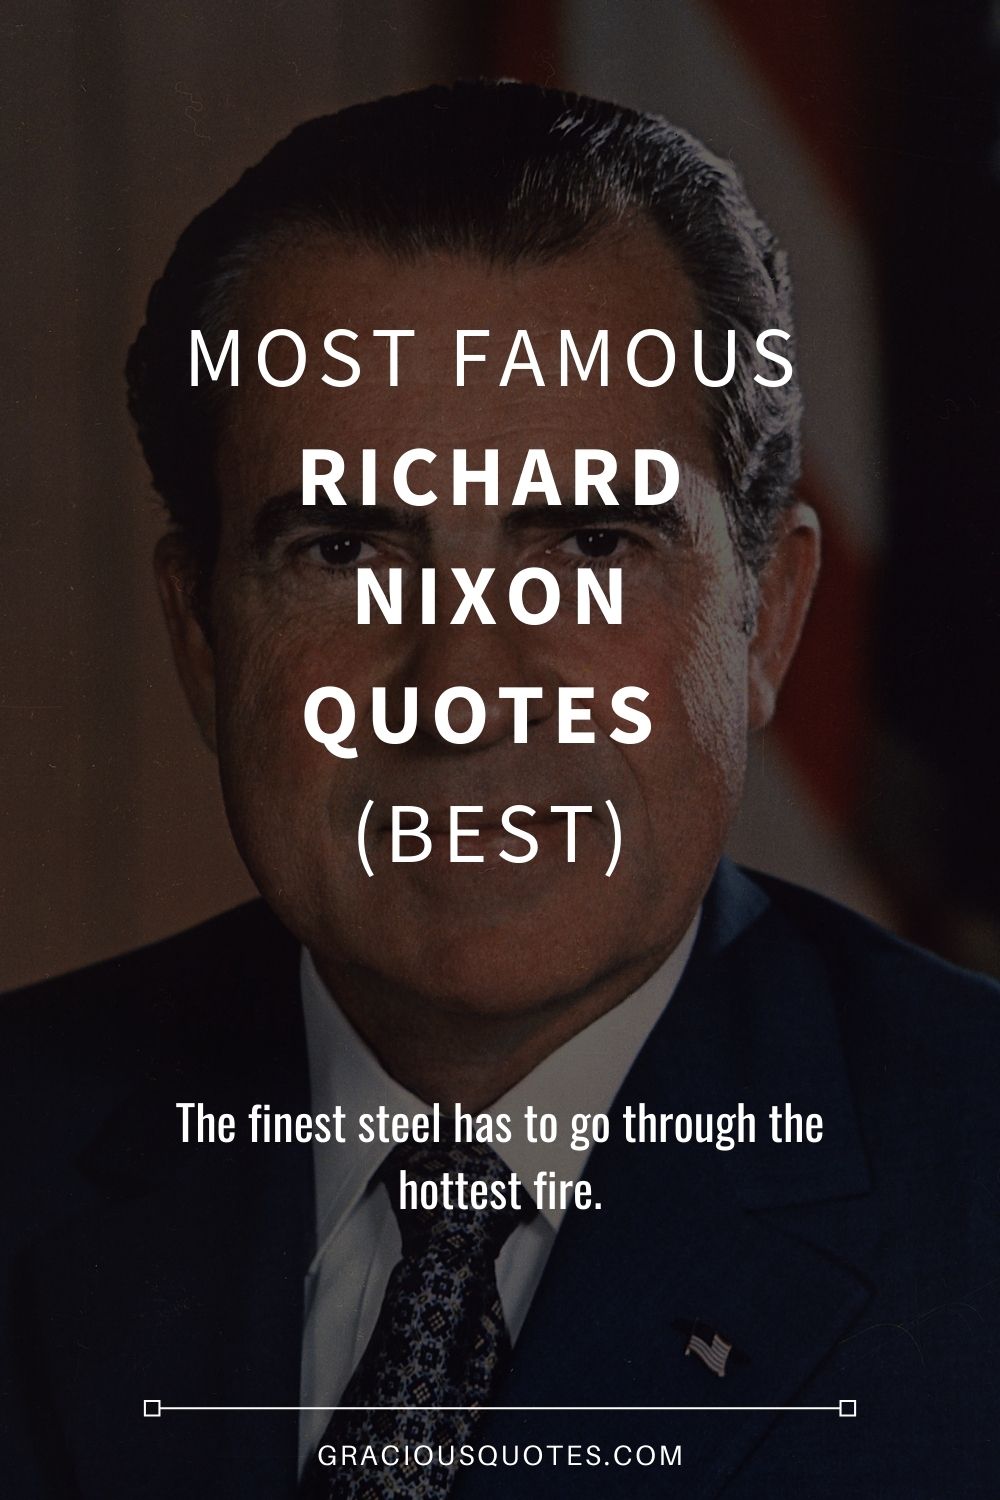 Most Famous Richard Nixon Quotes (BEST) - Gracious Quotes